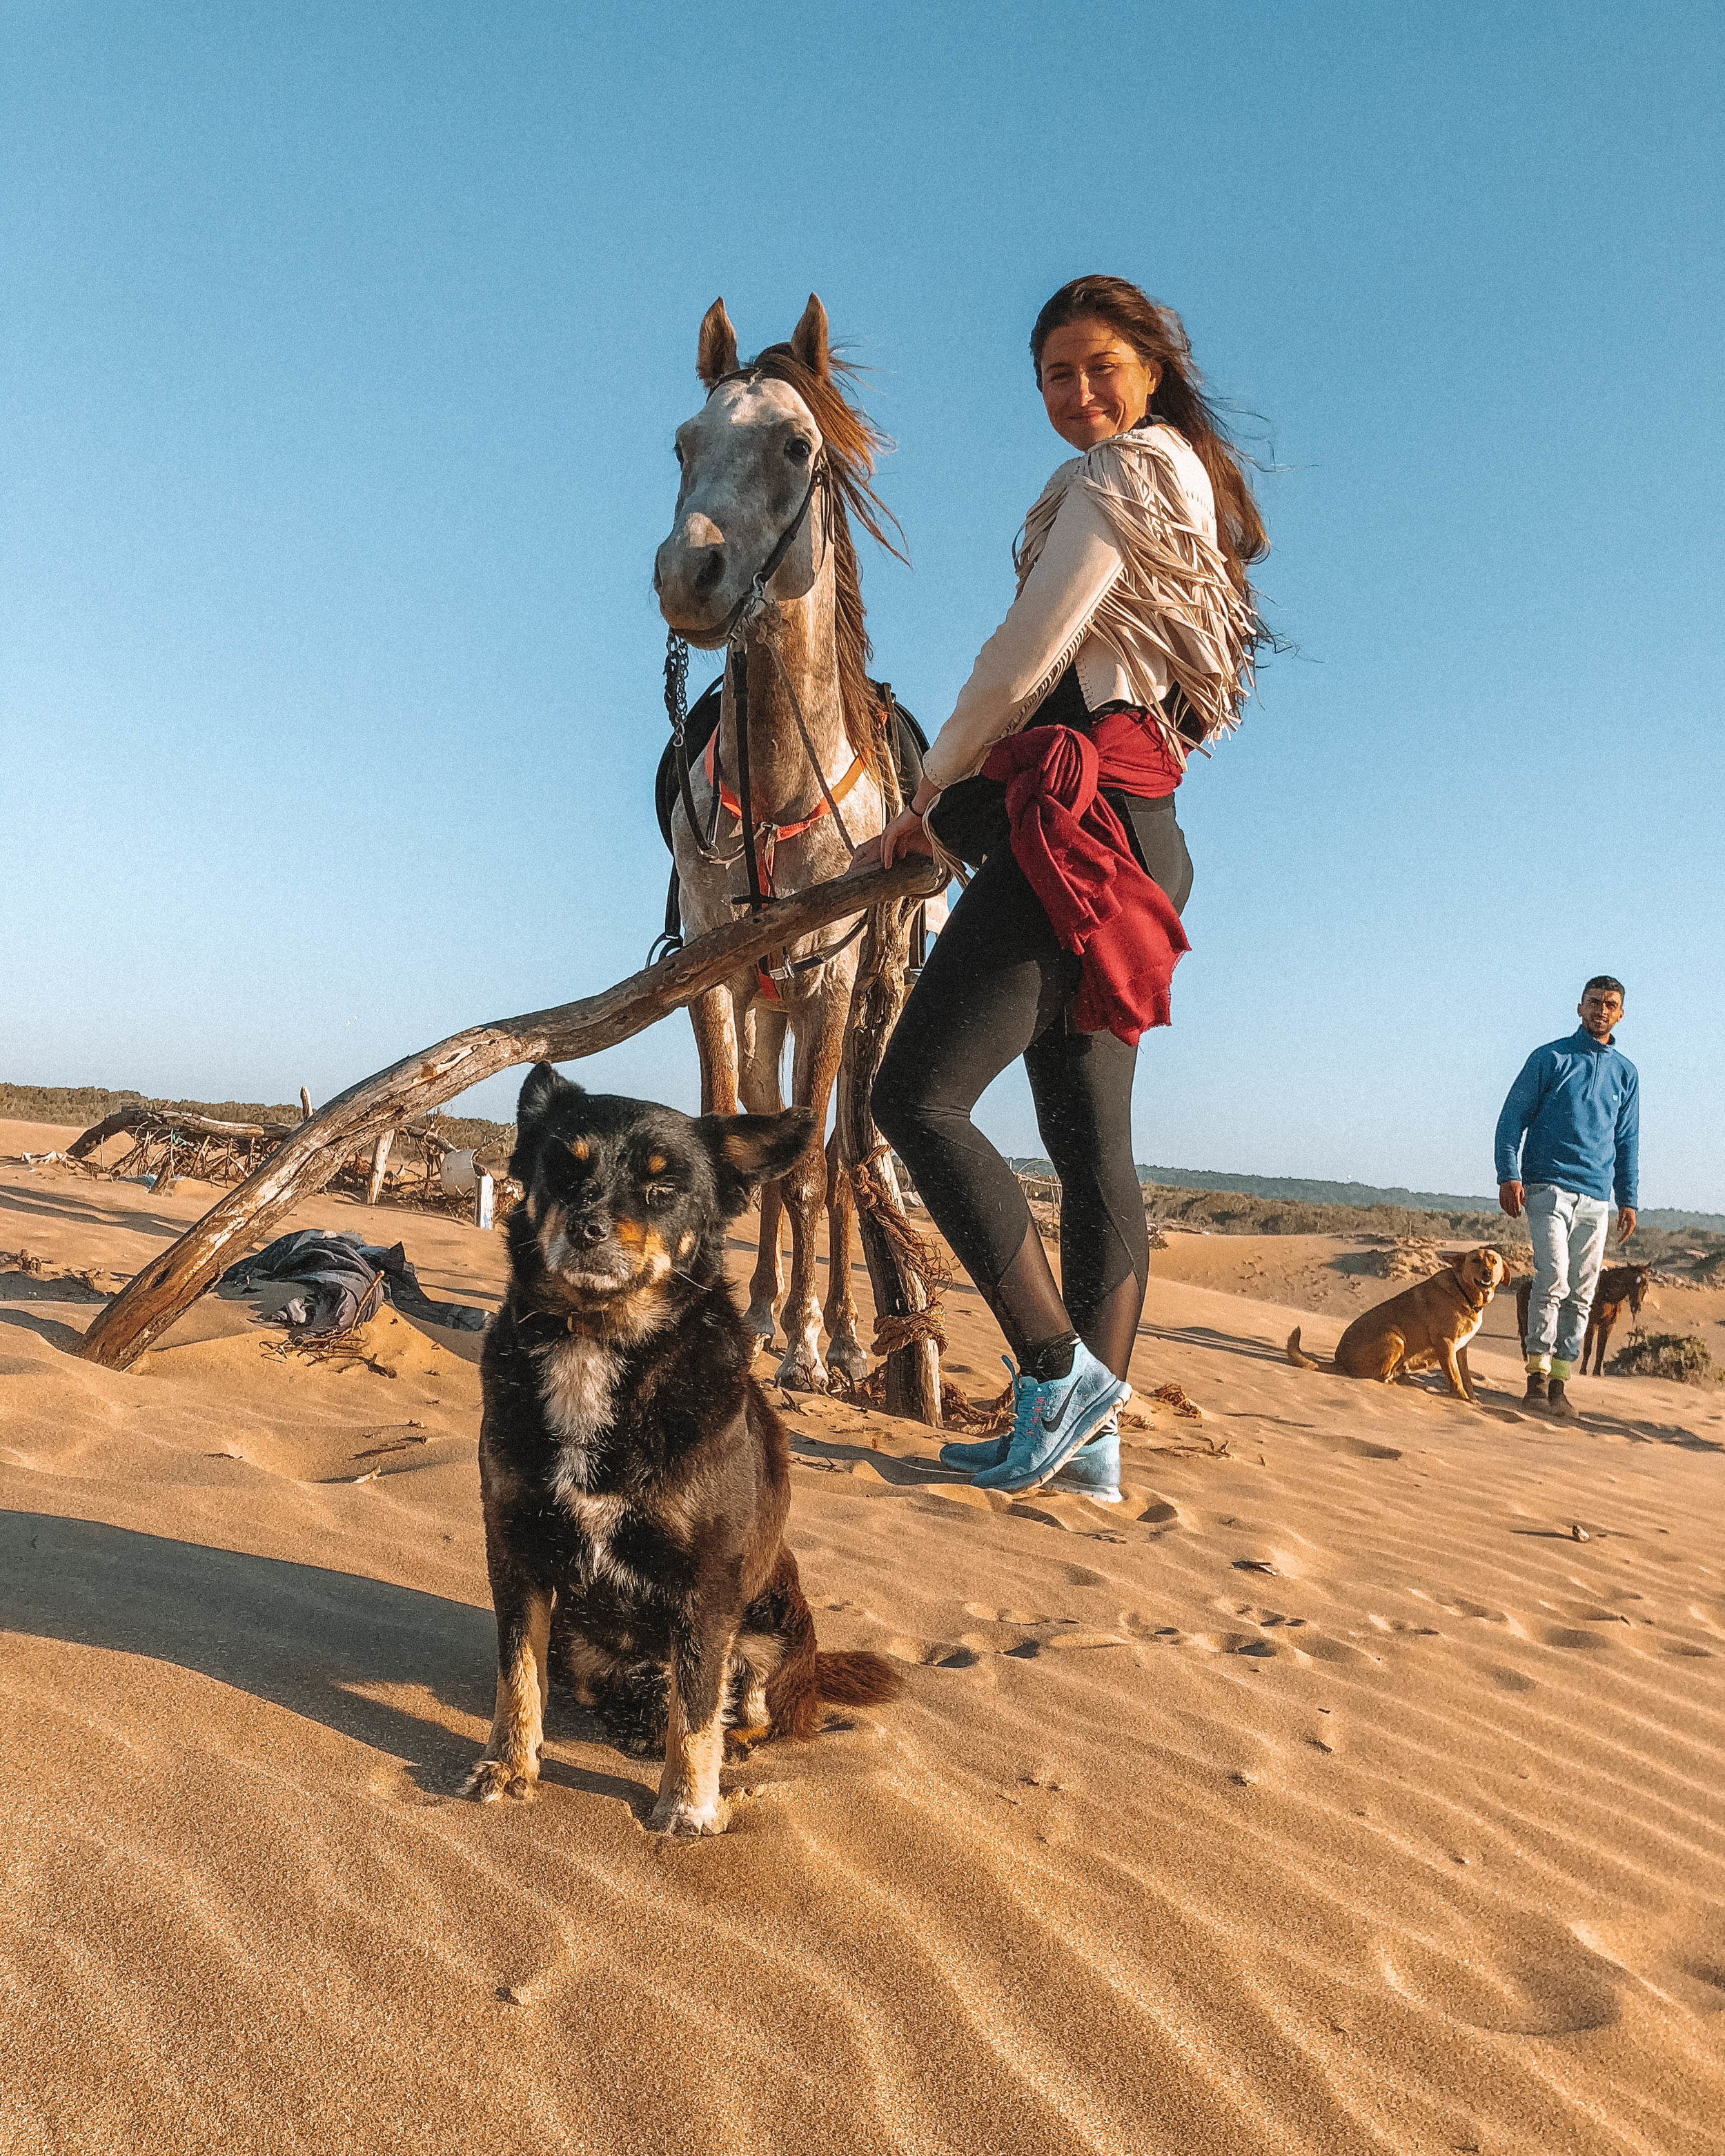 Me, my horse and a cute dog on the beach - Essaouira - Morocco